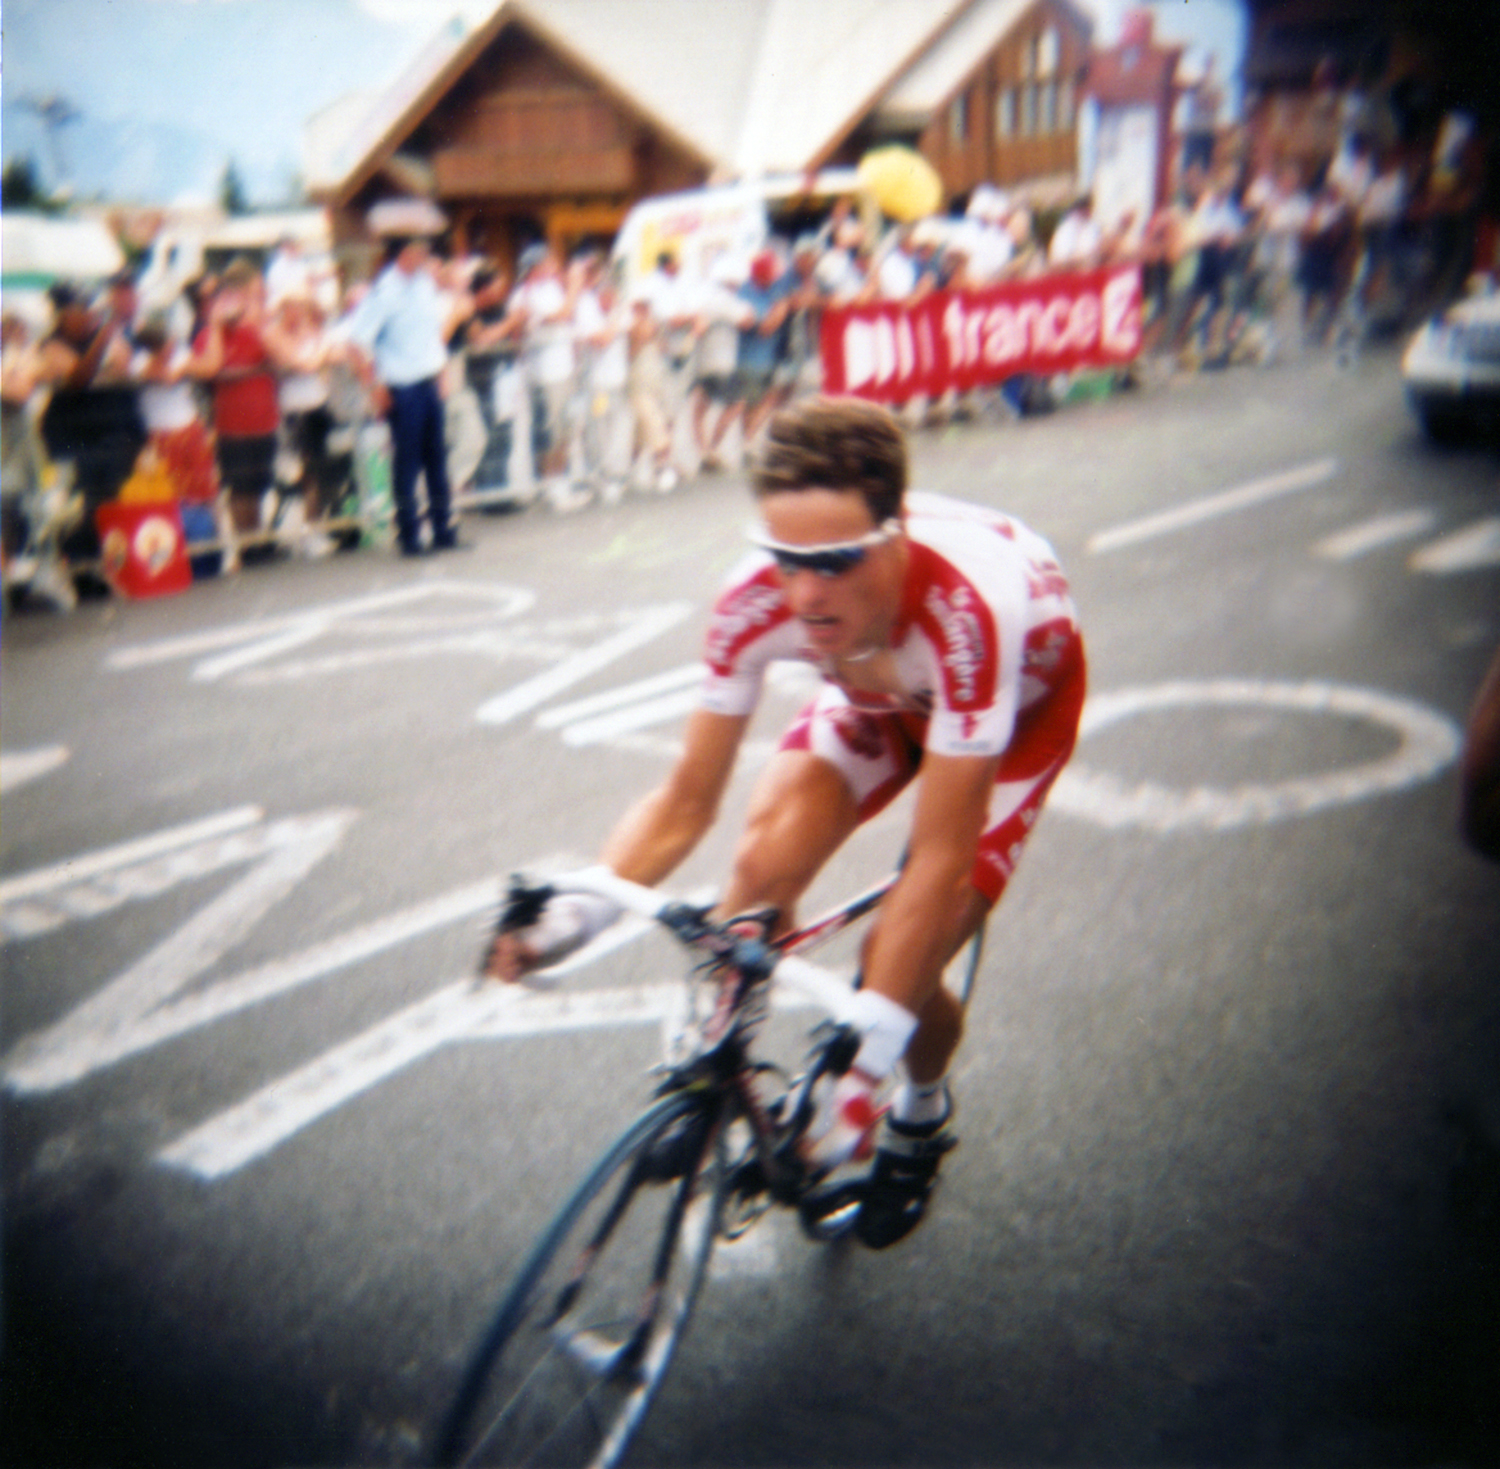  Sylvain Chavanel. Alpe d’Huez, France. Individual Time Trial. Taken with a  plastic Holga 120 film camera. 